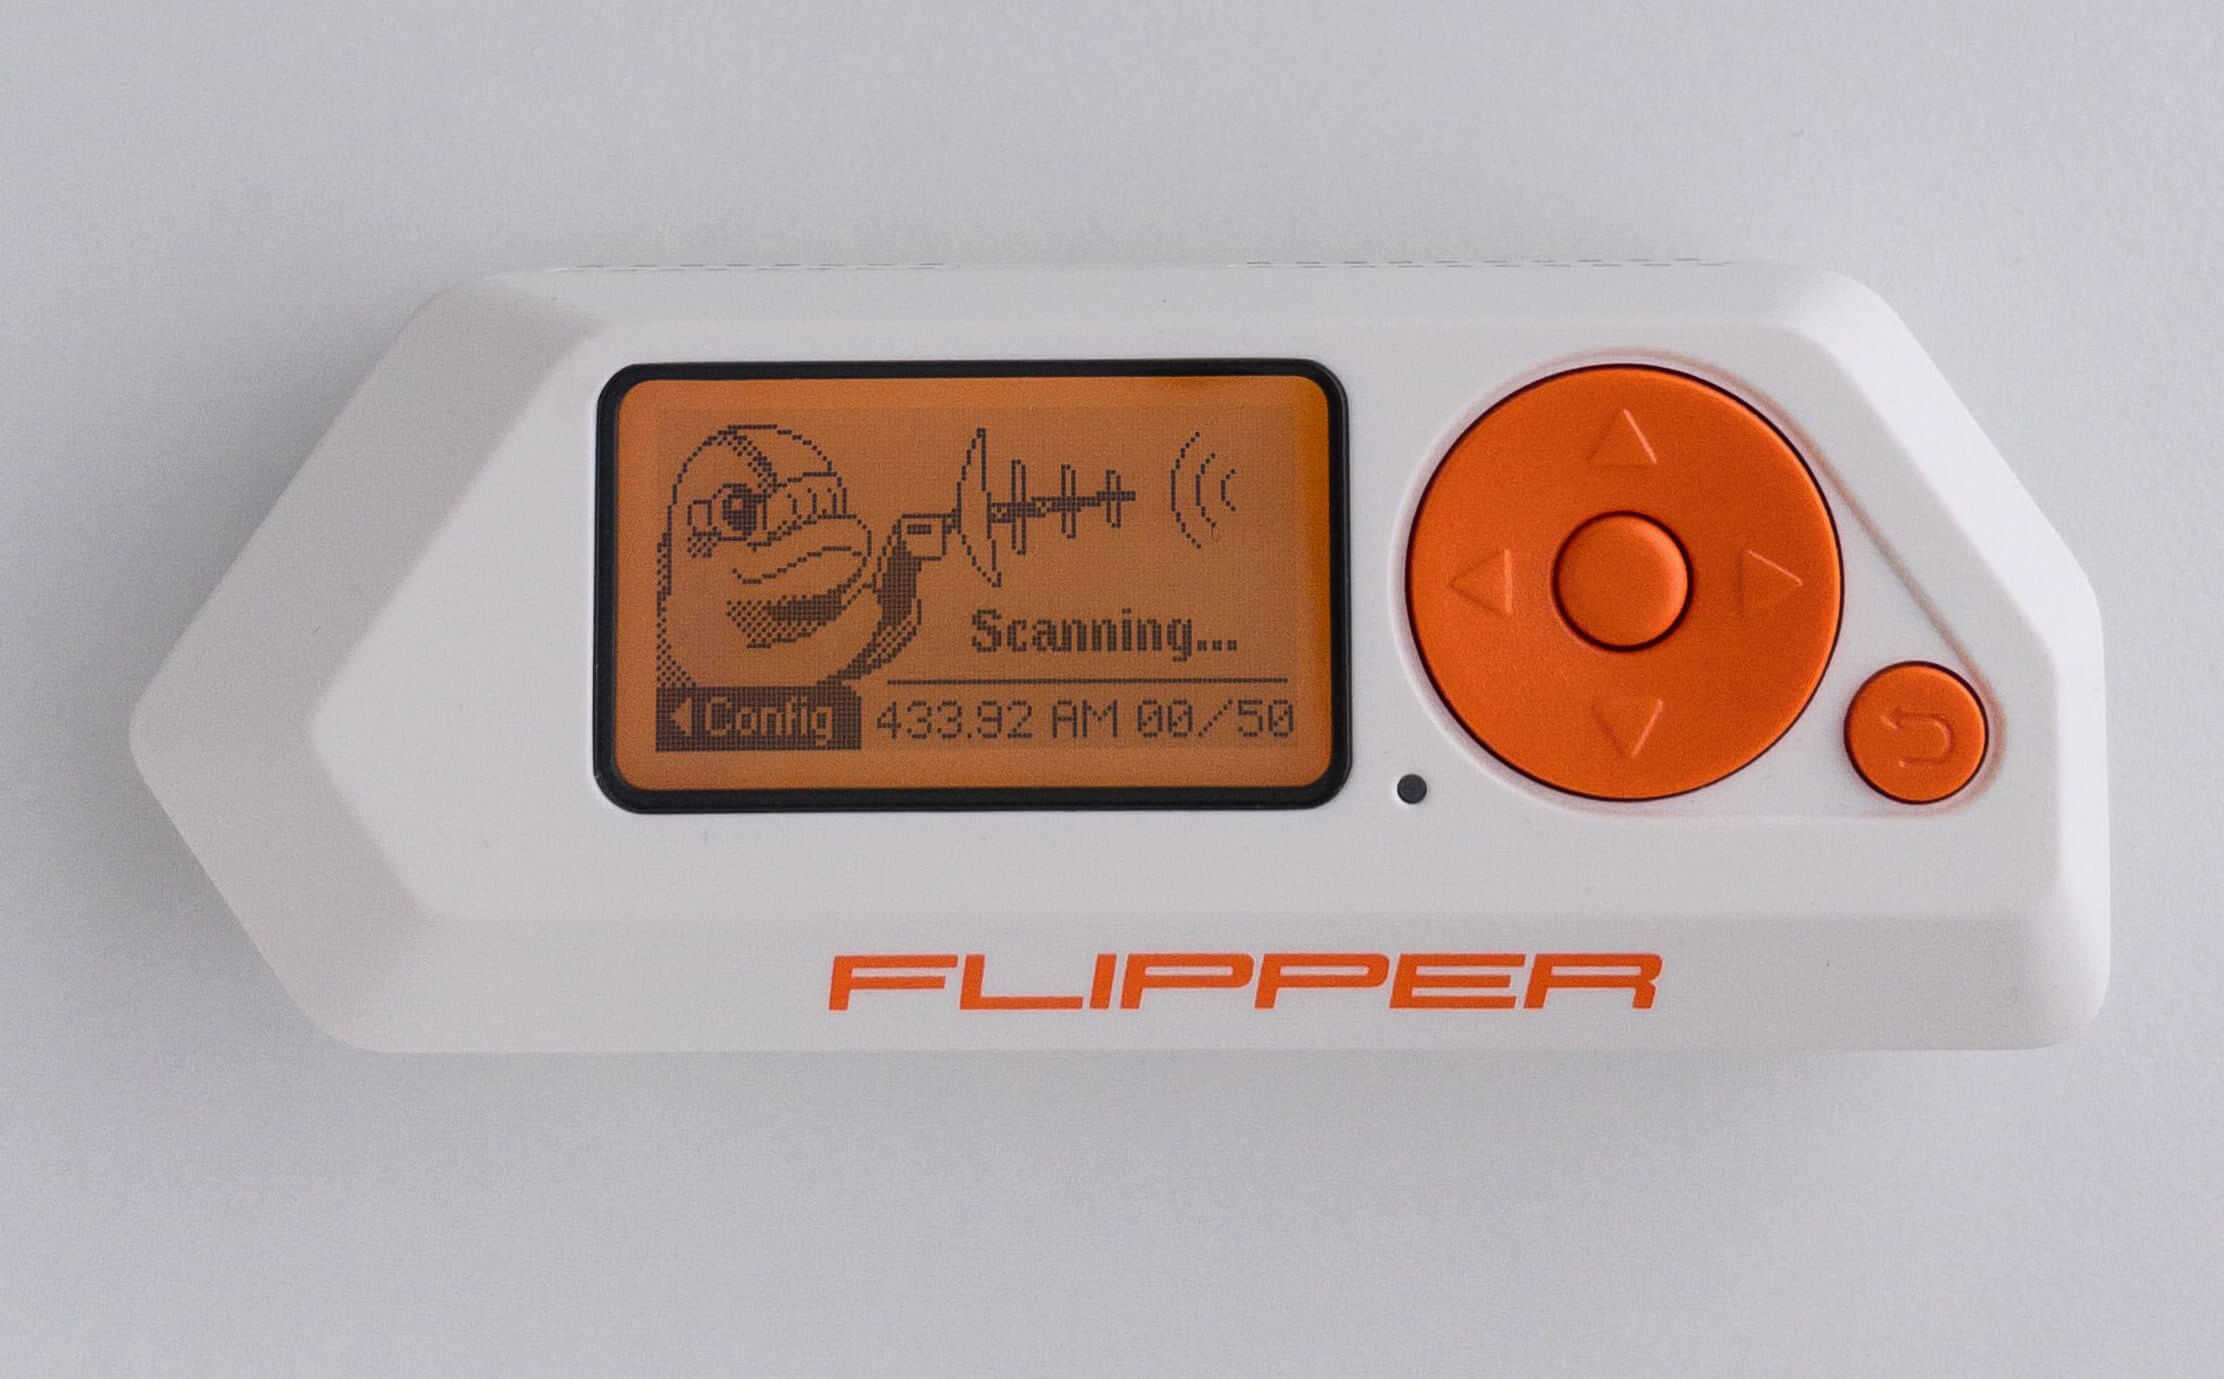 Flipper Zero Multi-Tool Tries To Make Hacking Look Friendly - SlashGear